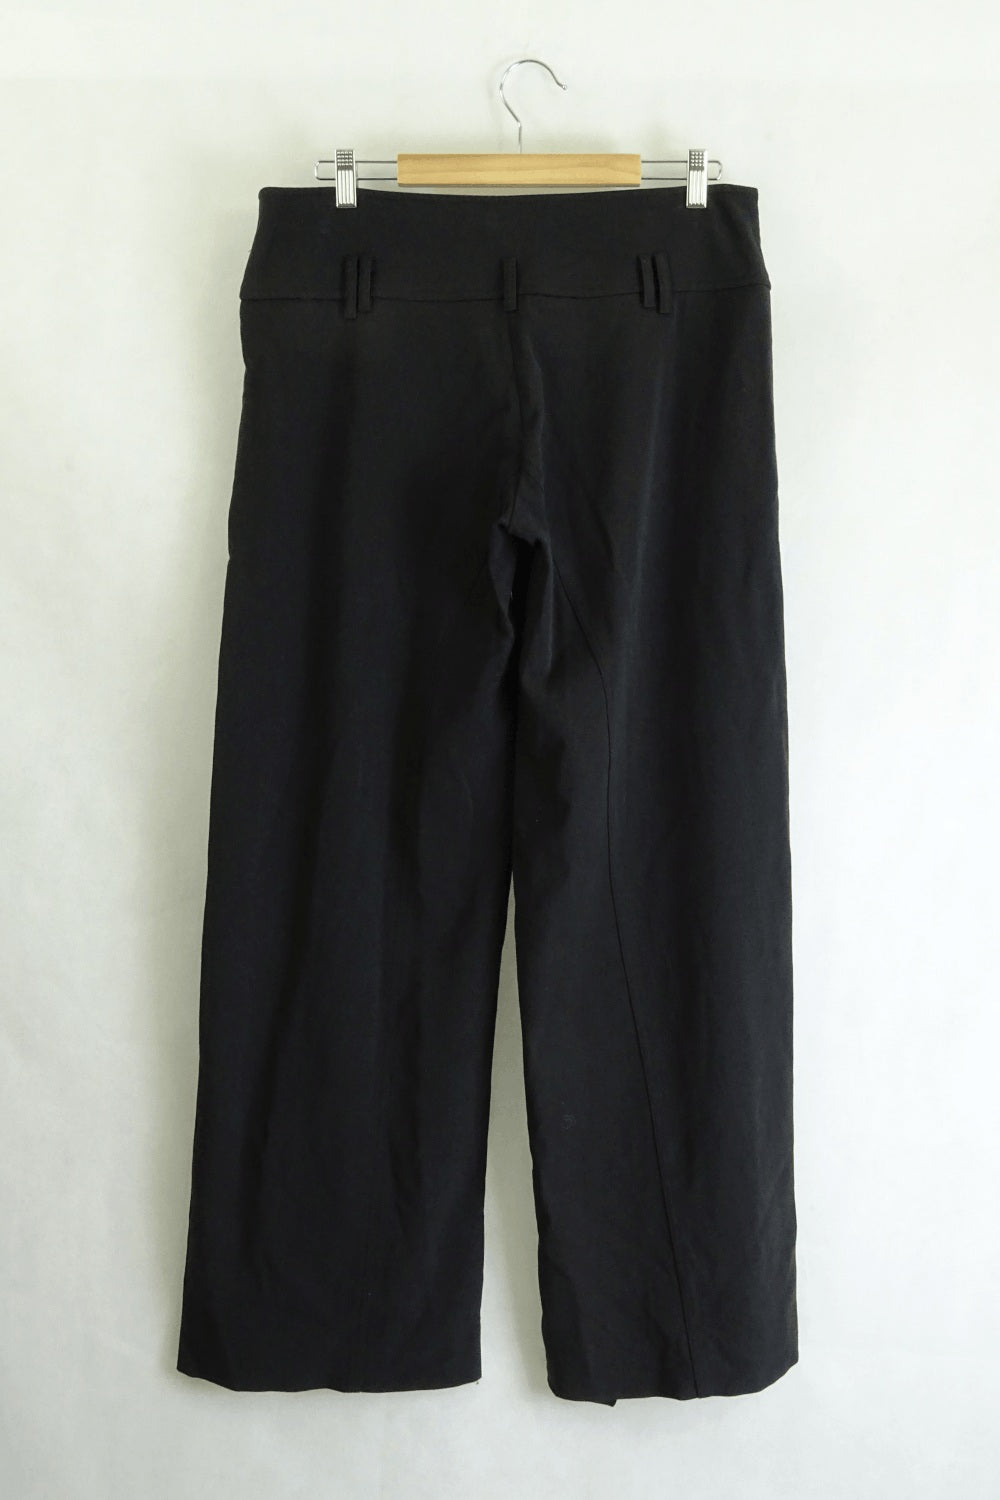 Zara Black Work Pants L - Reluv Clothing Australia